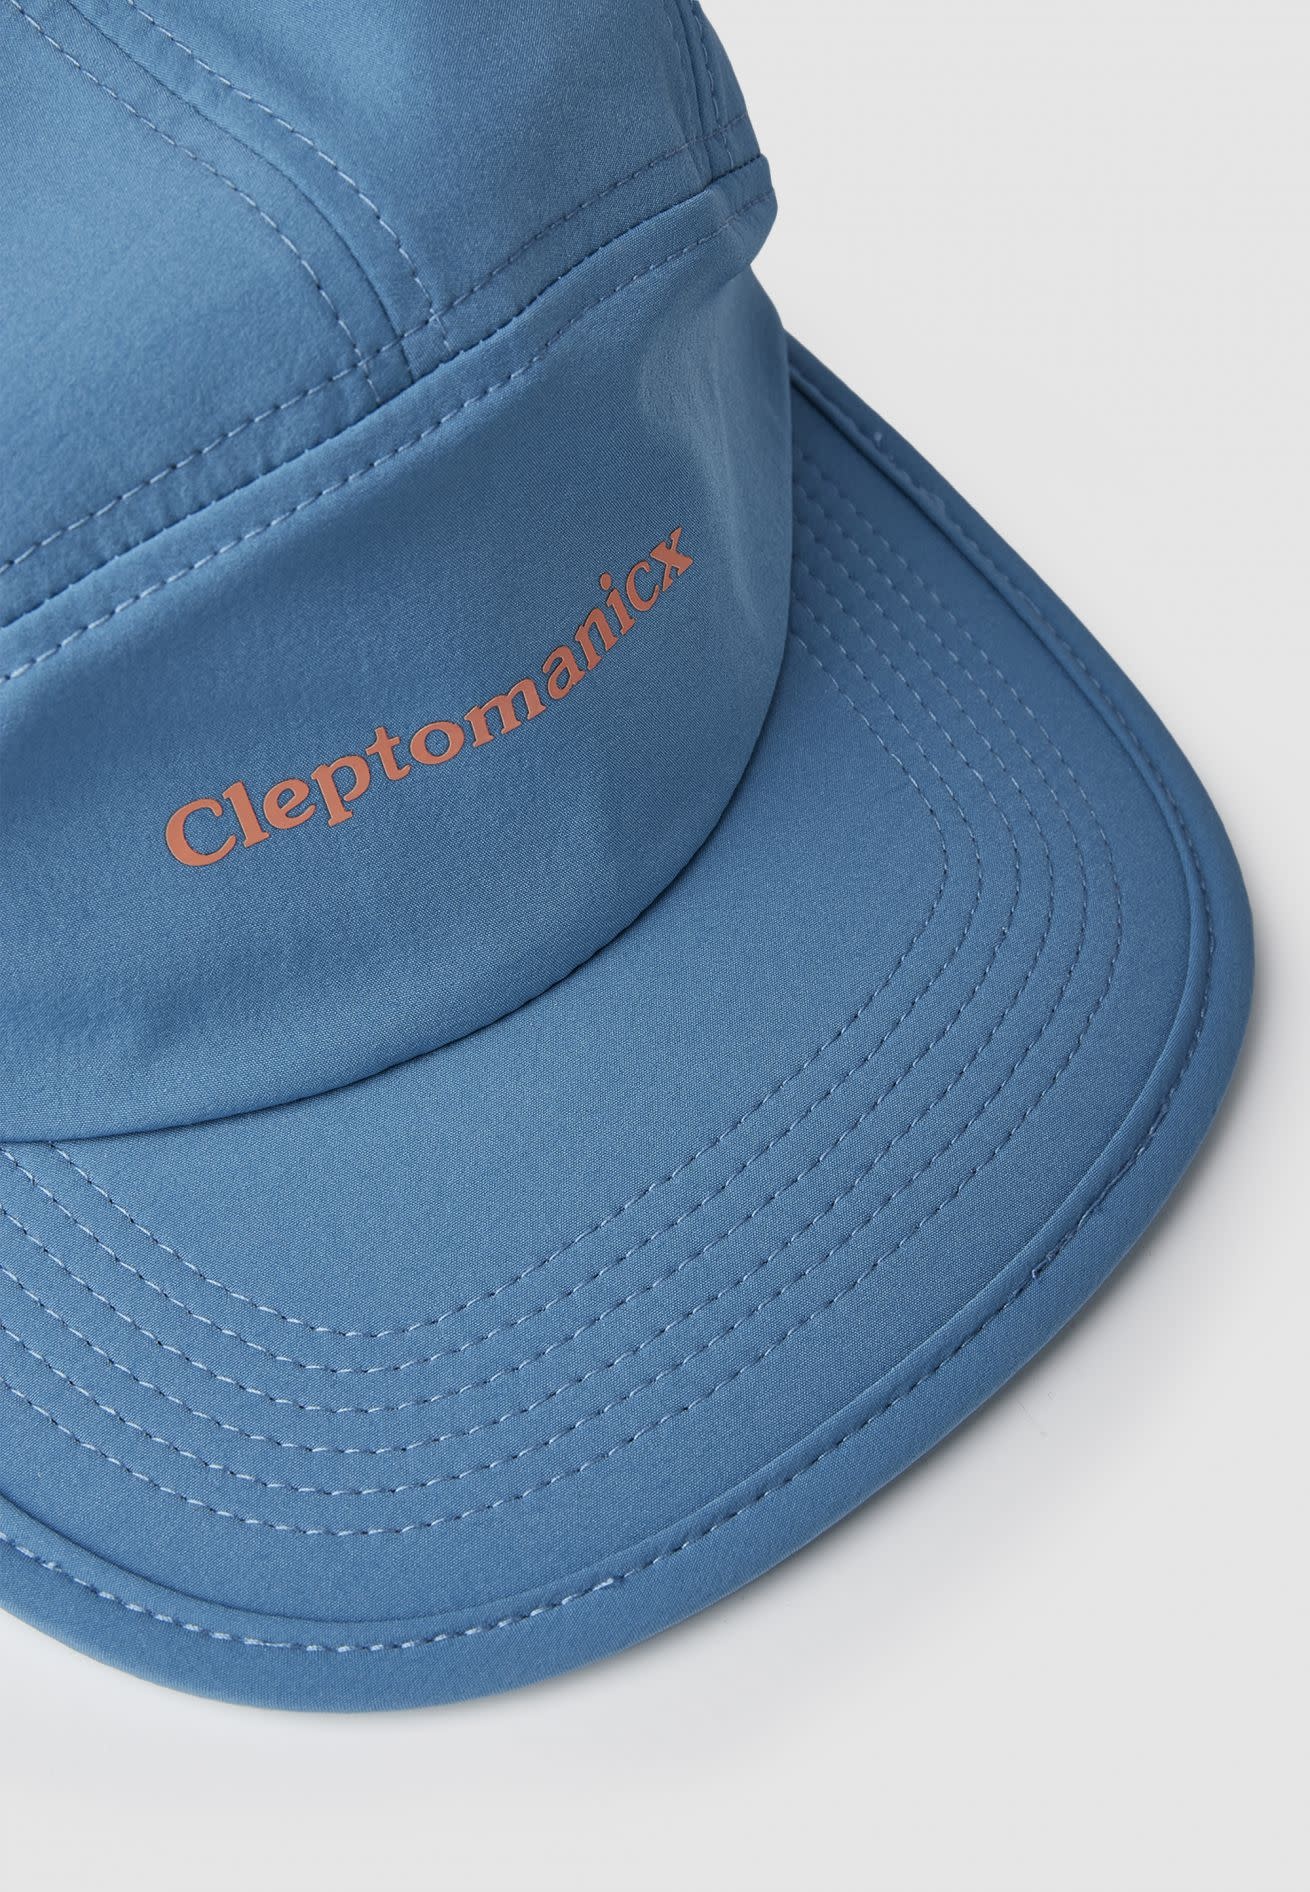 Cleptomanicx Cleptomanicx, 5-Panel Cap, blue coral